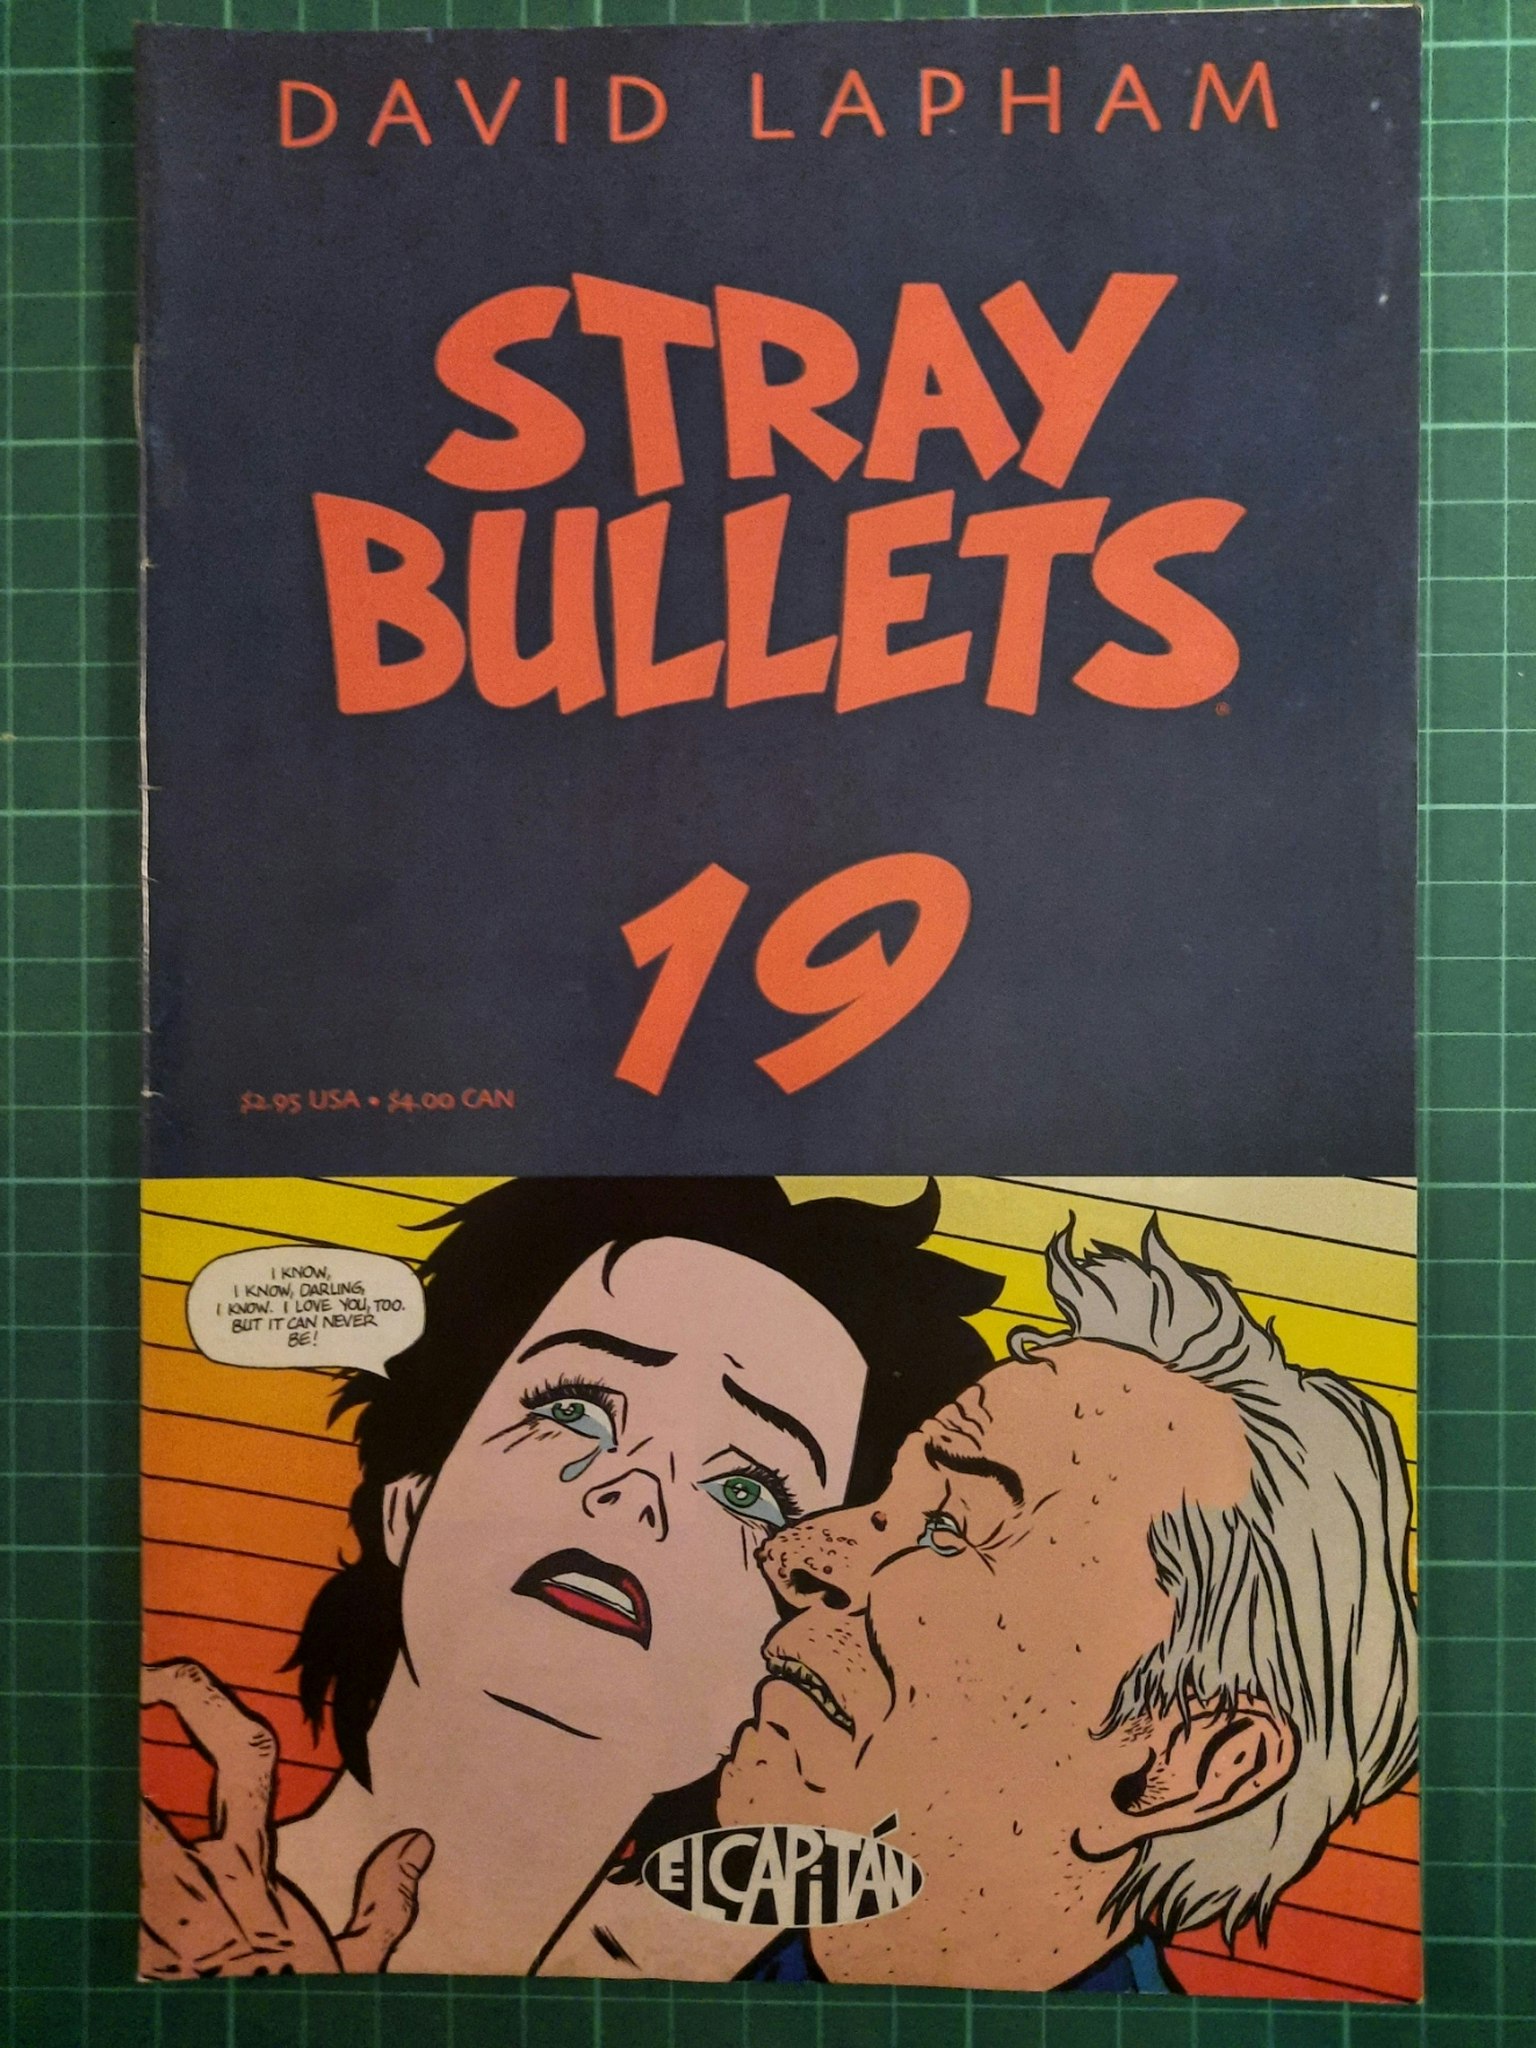 Stray bullets #19